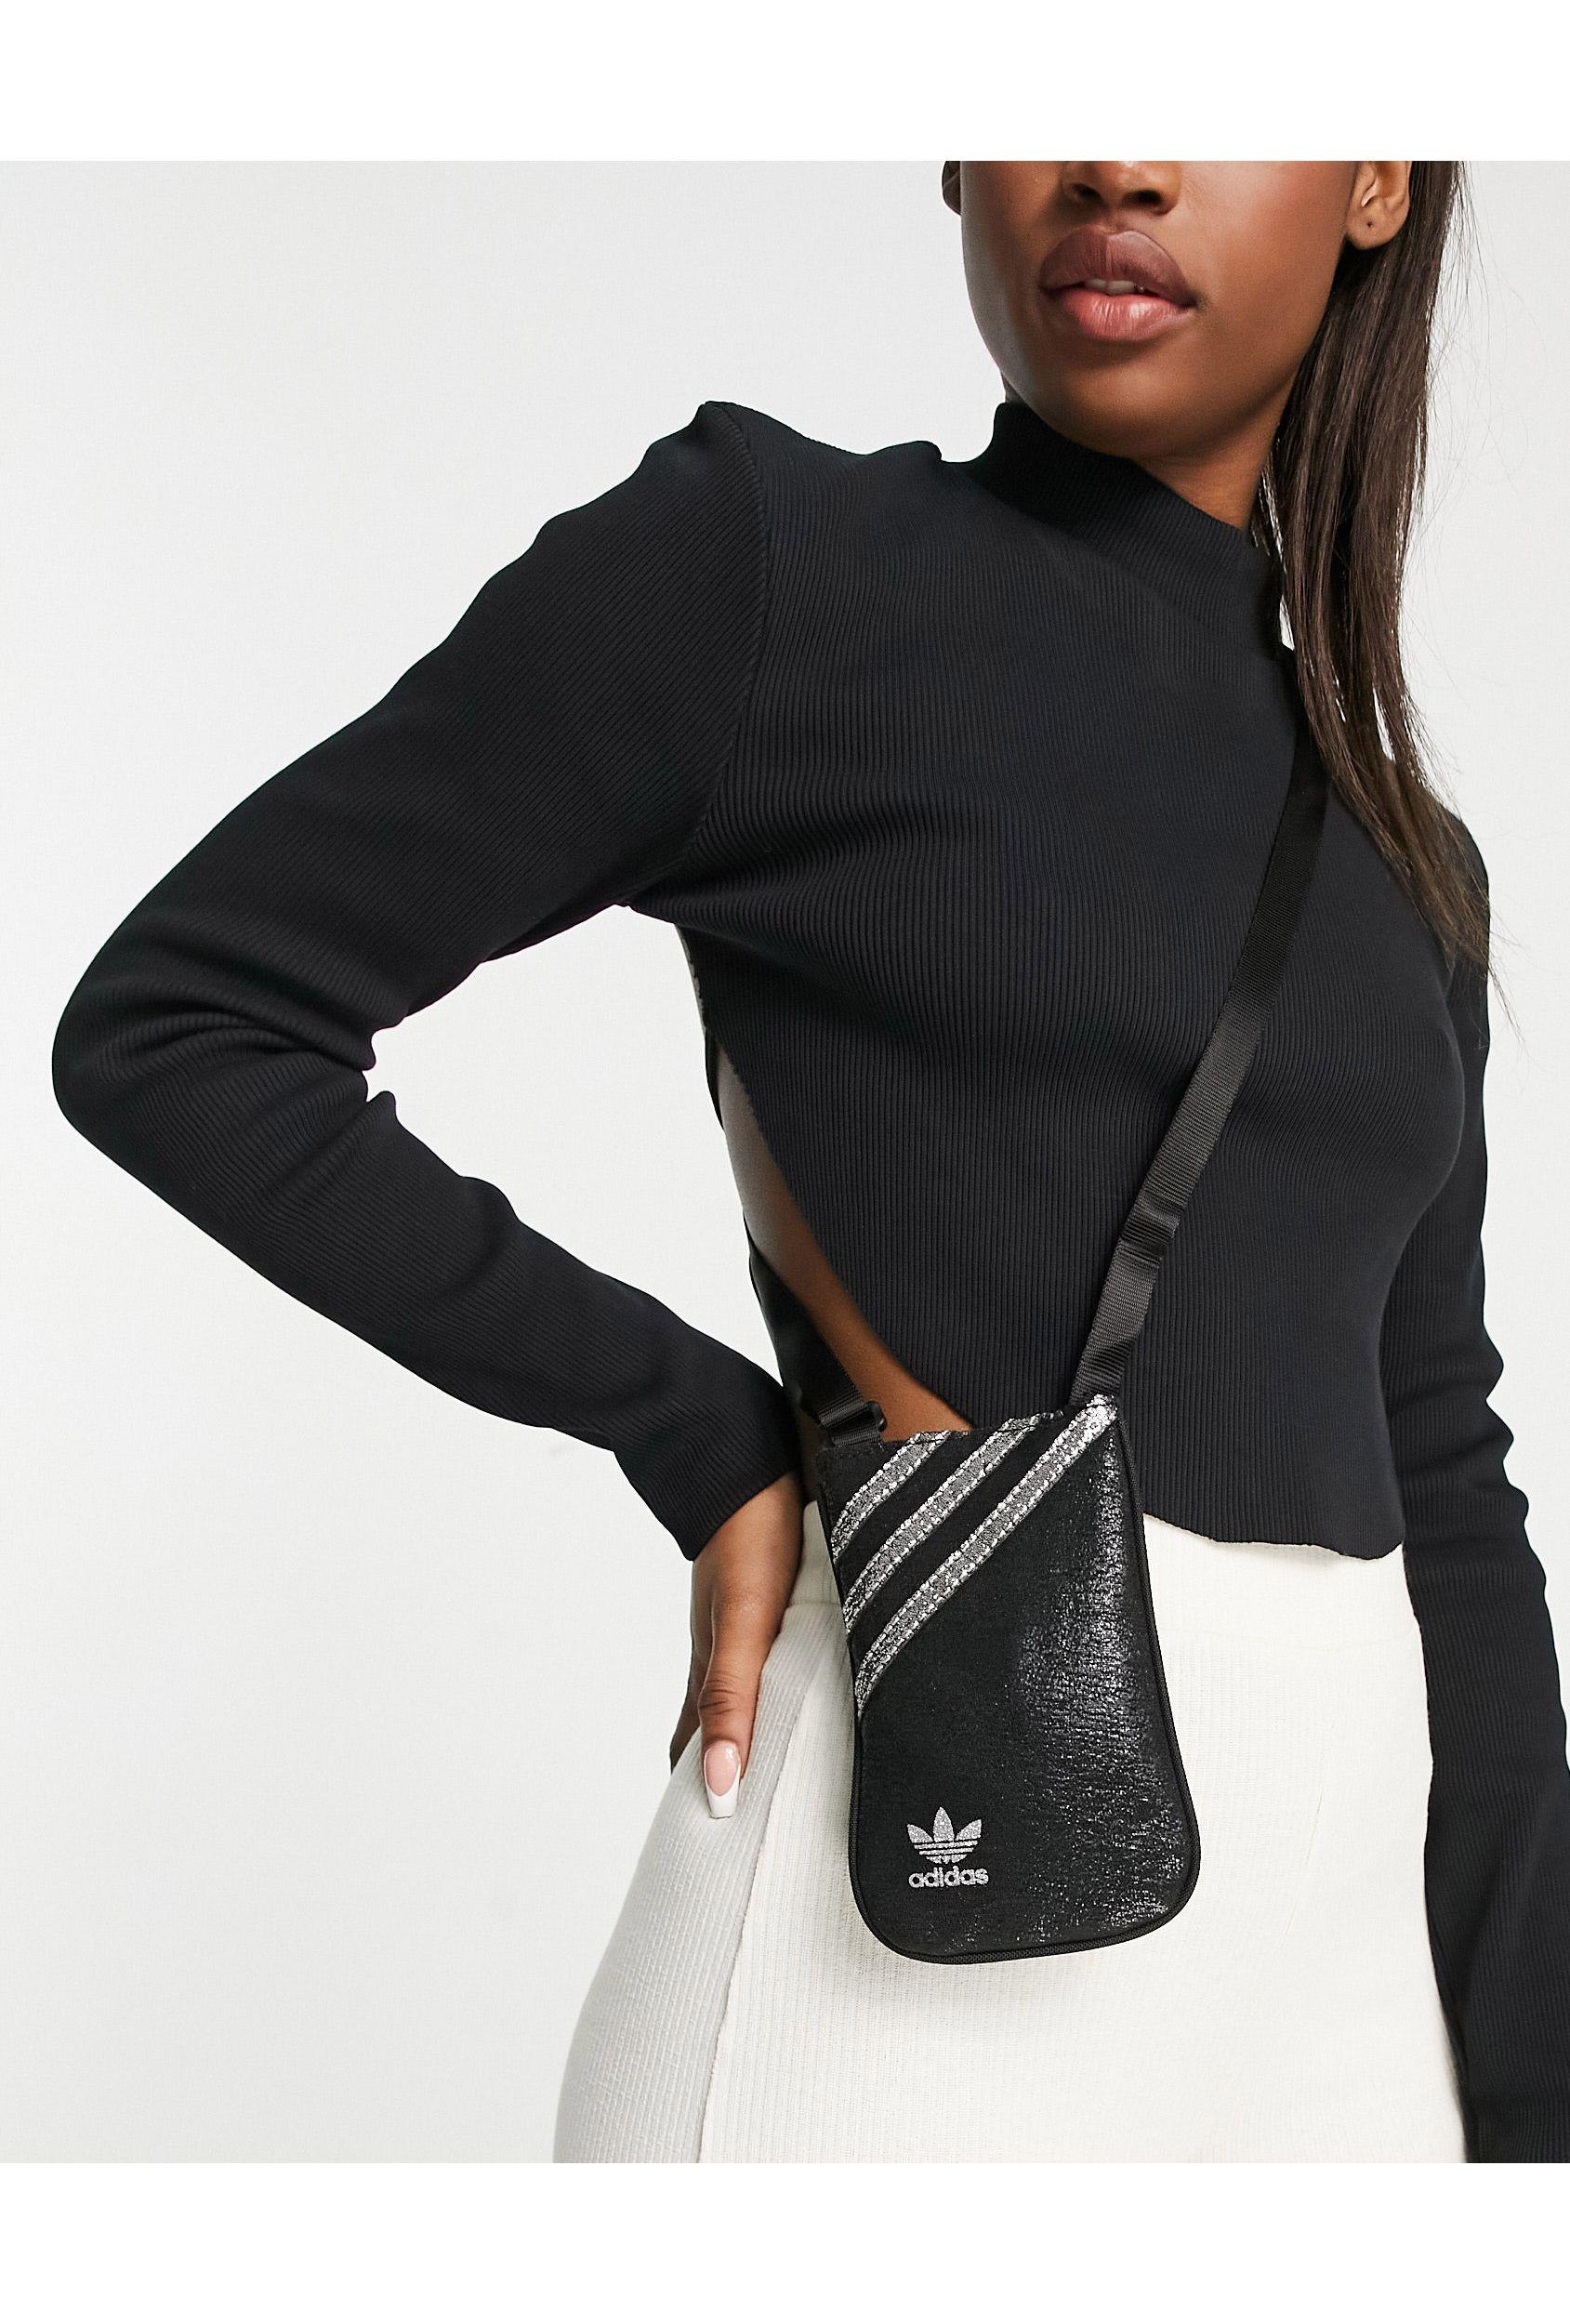 adidas Originals Logo Mini Pouch Bag in Black - Lyst